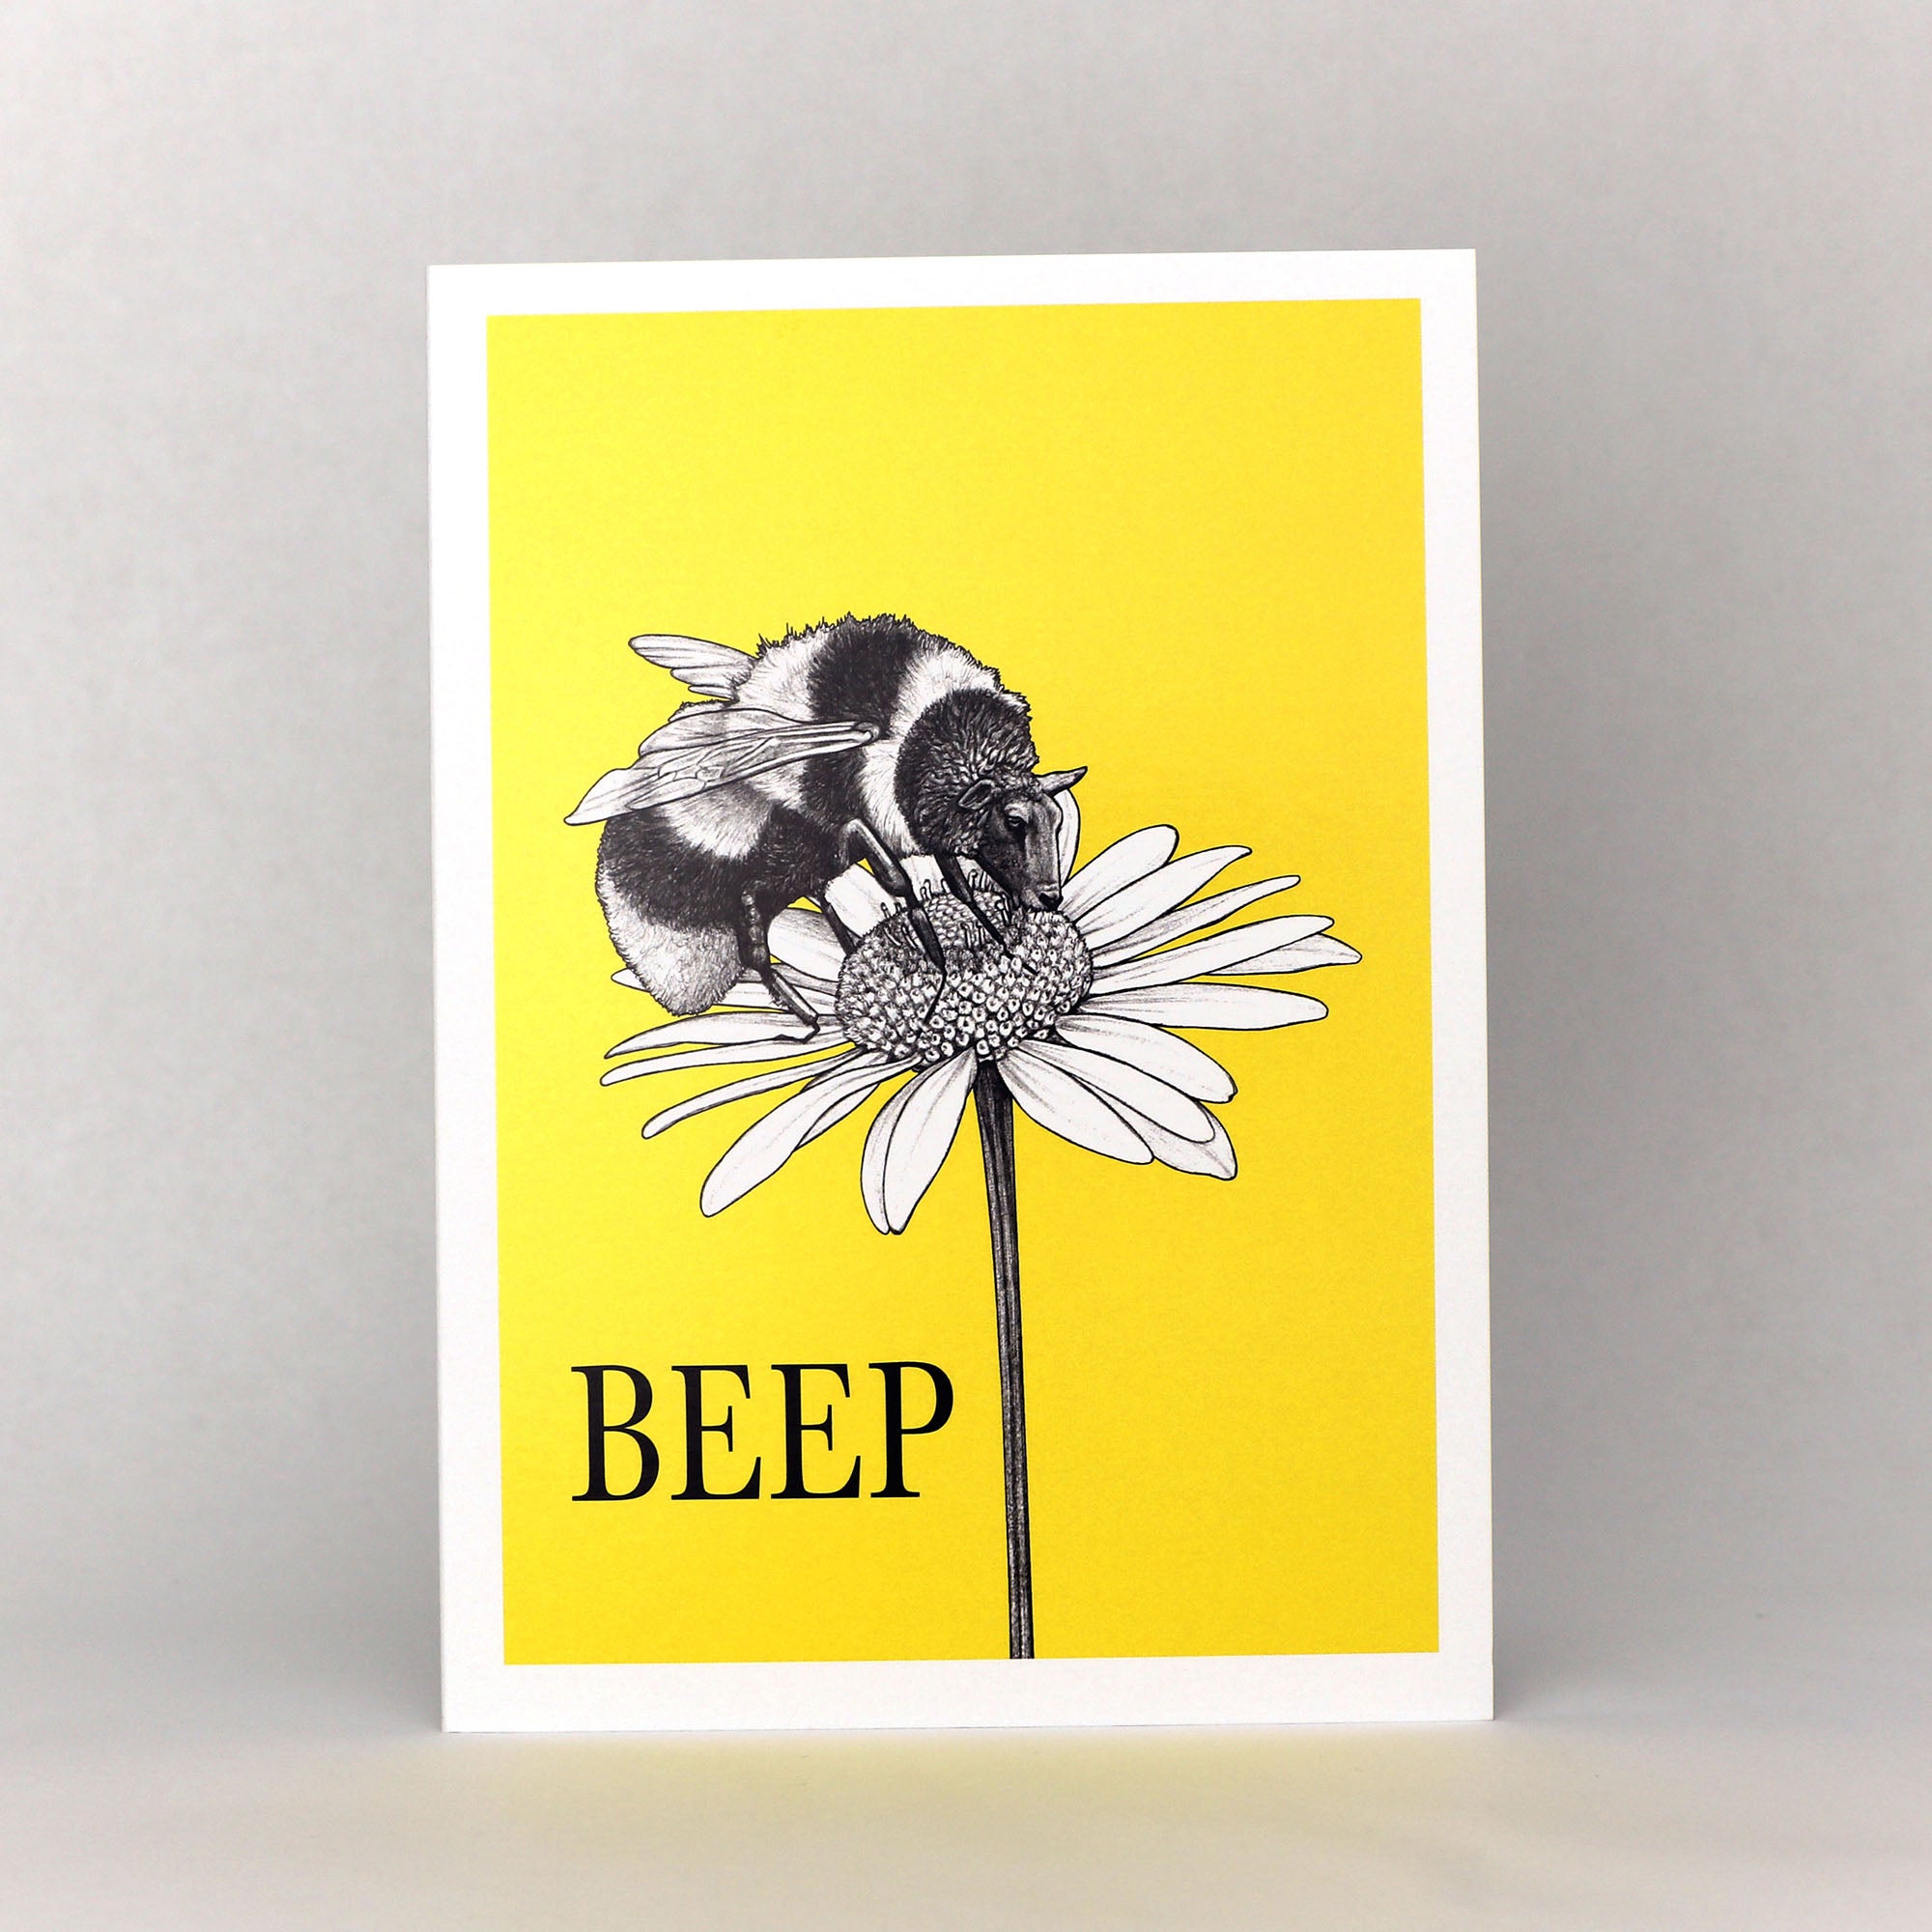 Beep | Bee + Sheep Hybrid Animal | 5x7" Greeting Card